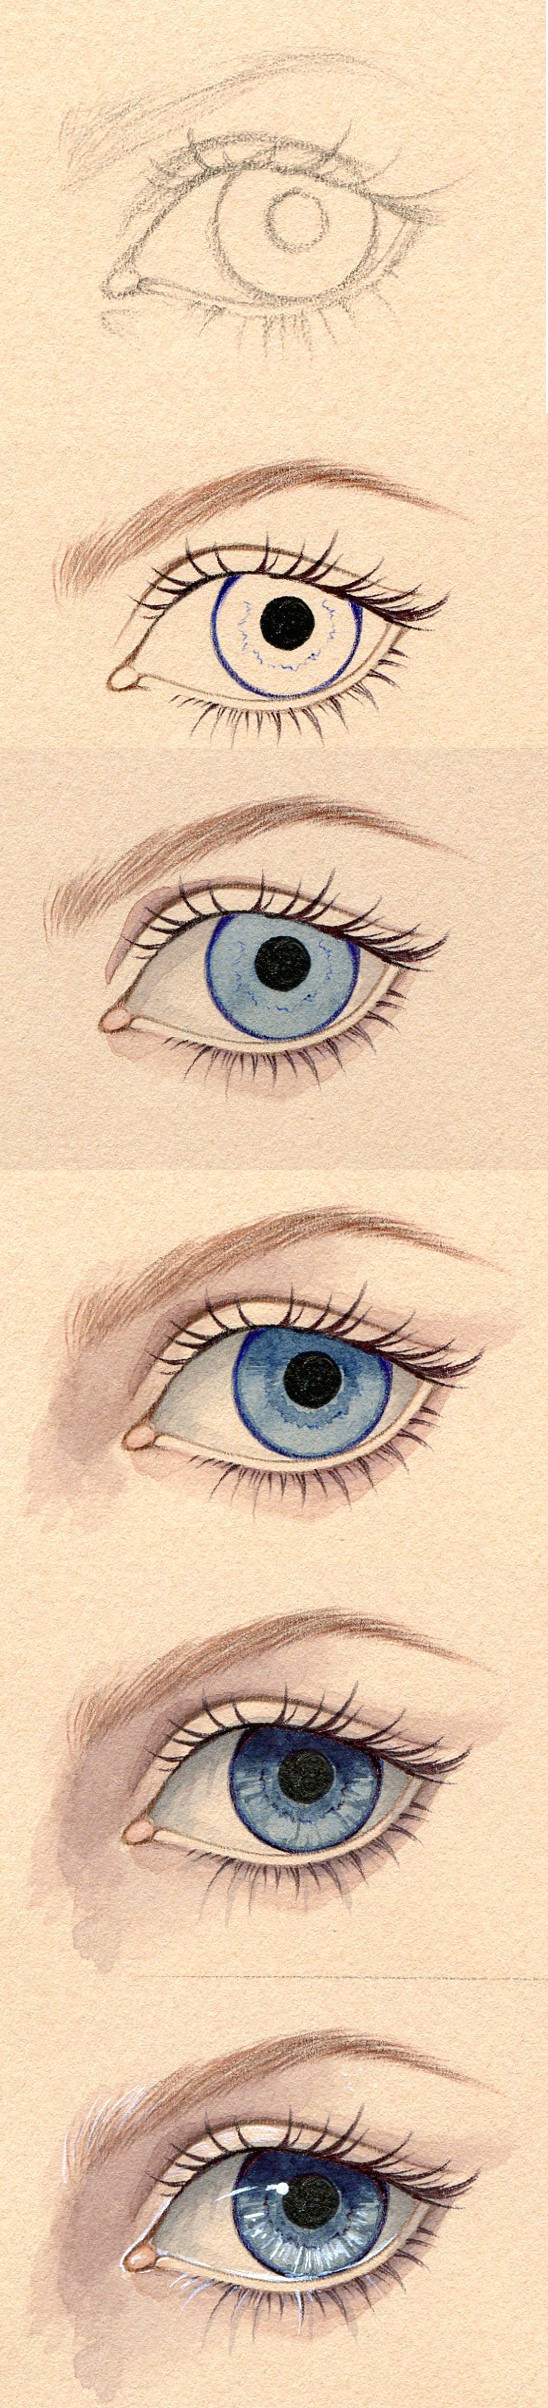 eye tutorial by neko art deviantart com on deviantart